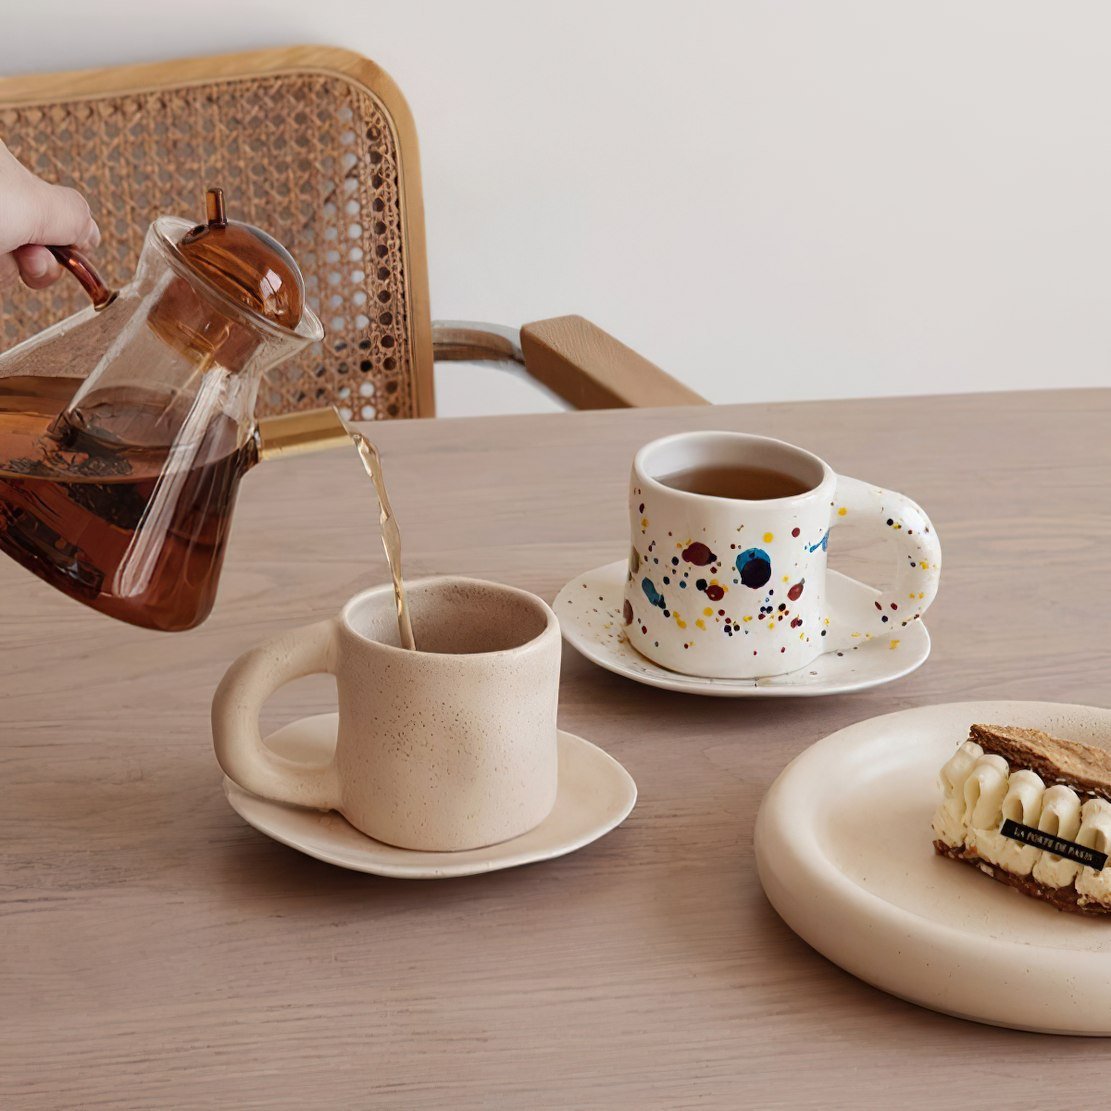 Ceramic pottery coffee mug and saucer